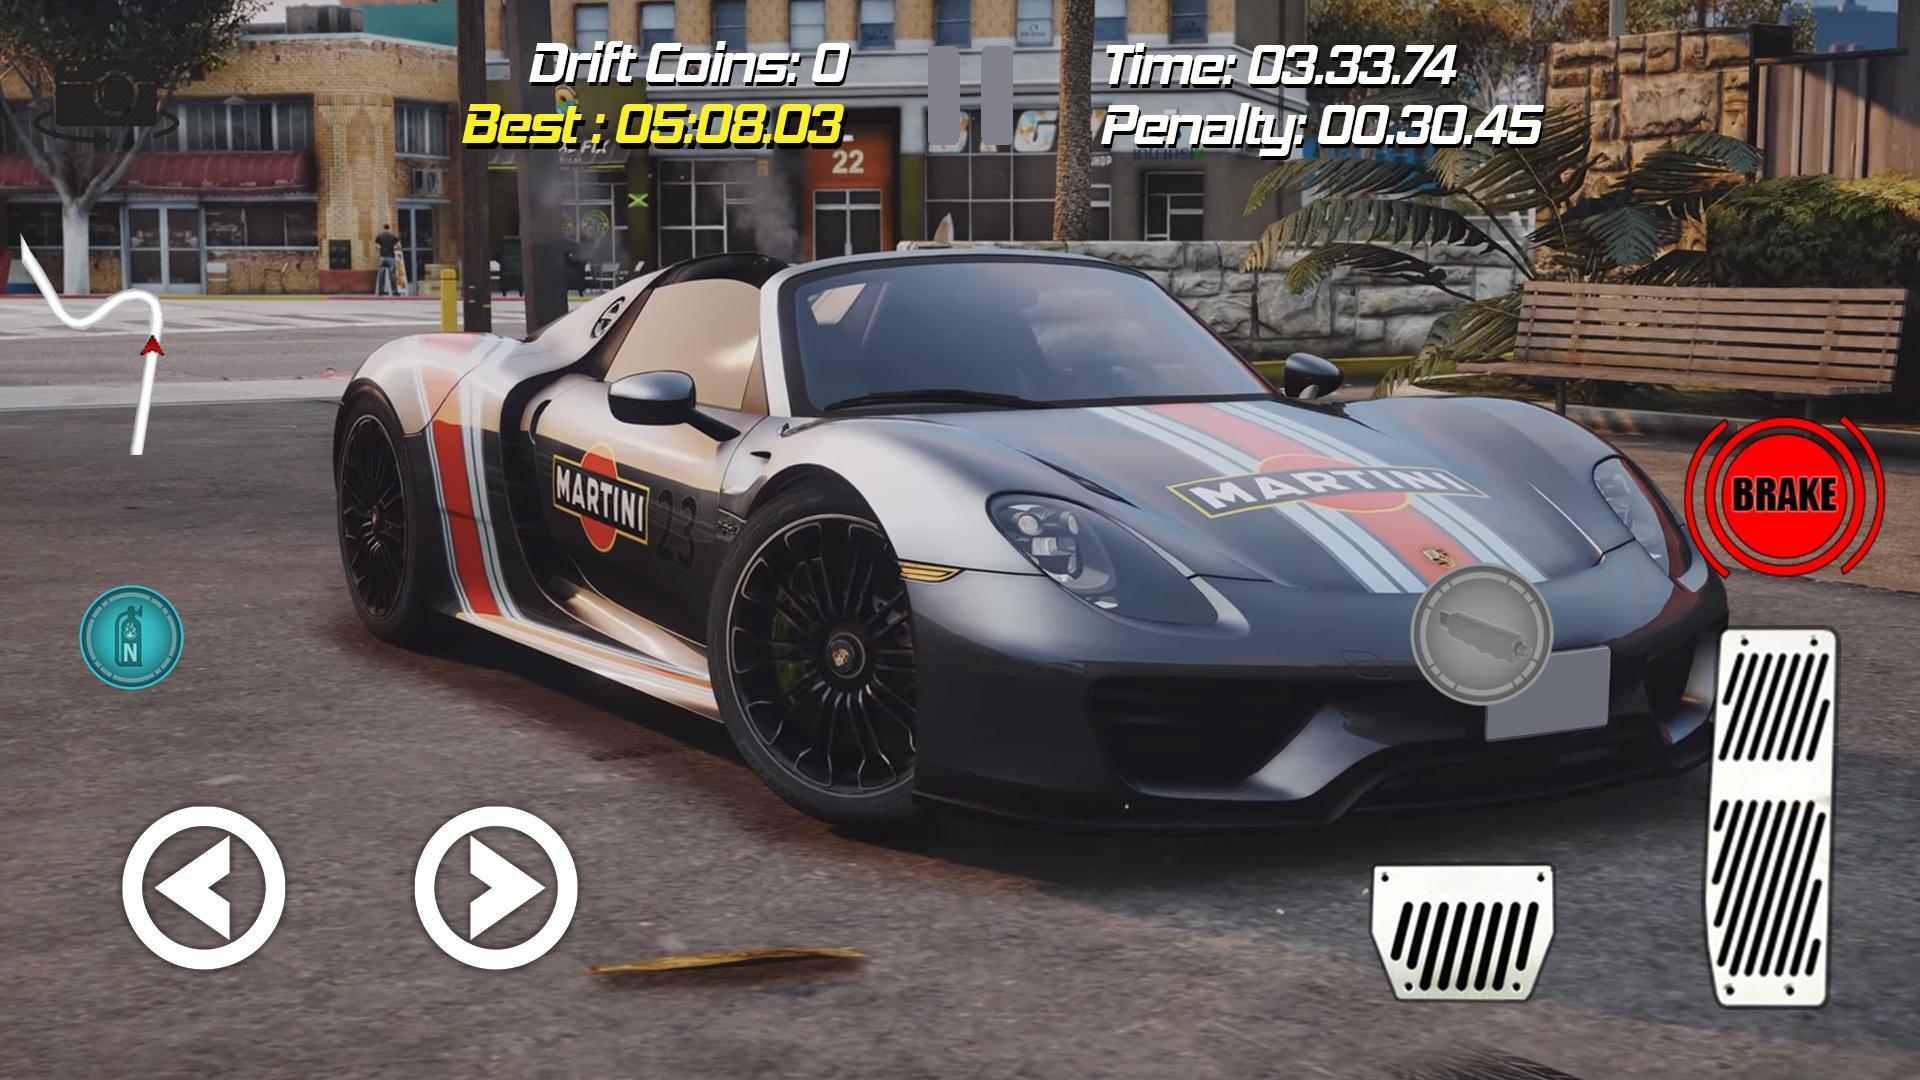 Drift Racing Porsche 918 Spyder Simulator Game For Android Apk Download - roblox vehicle simulator porsche